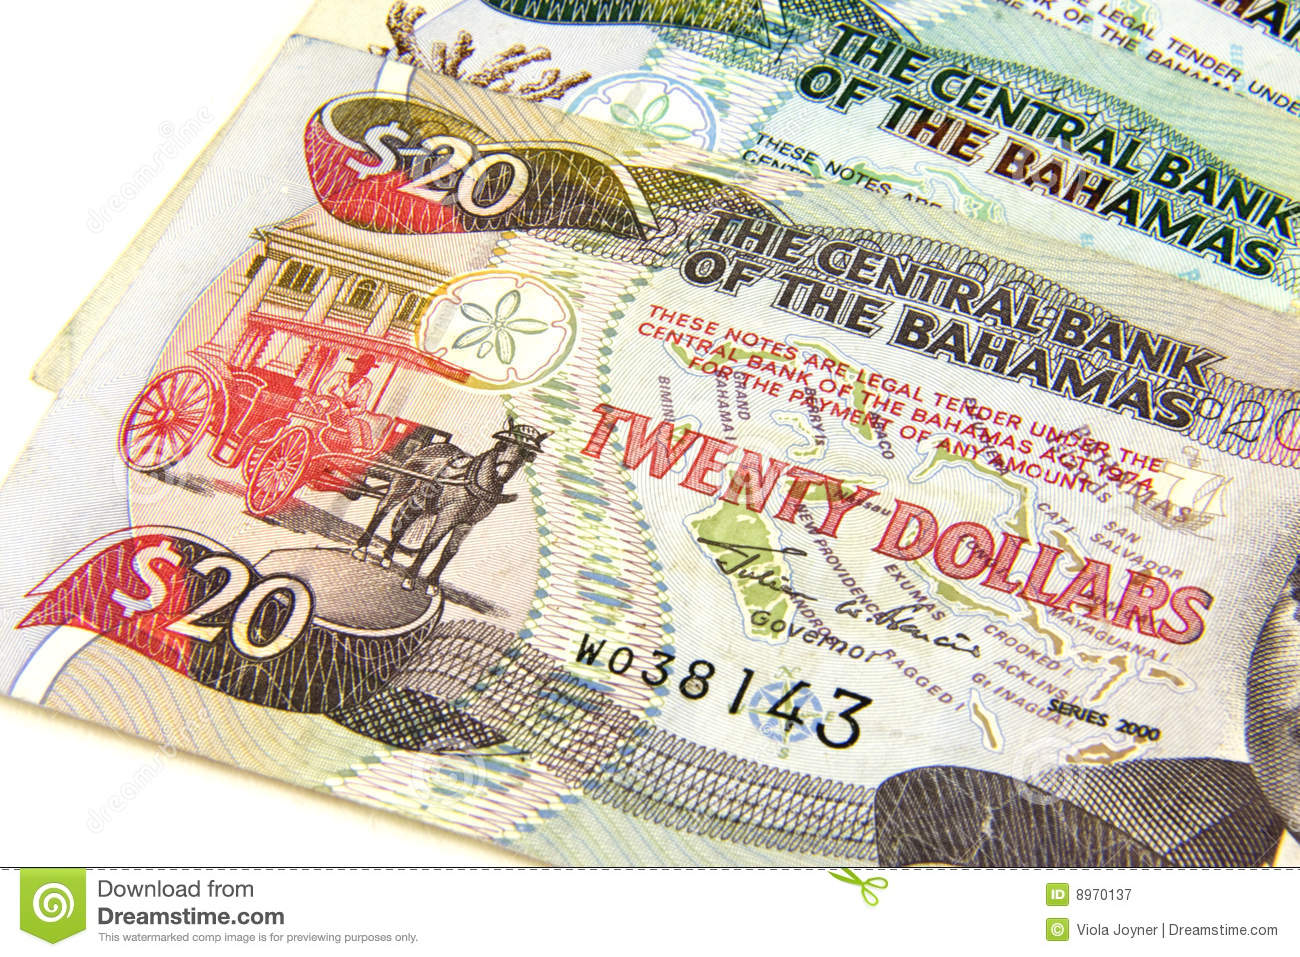 Bahamian Dollar #28